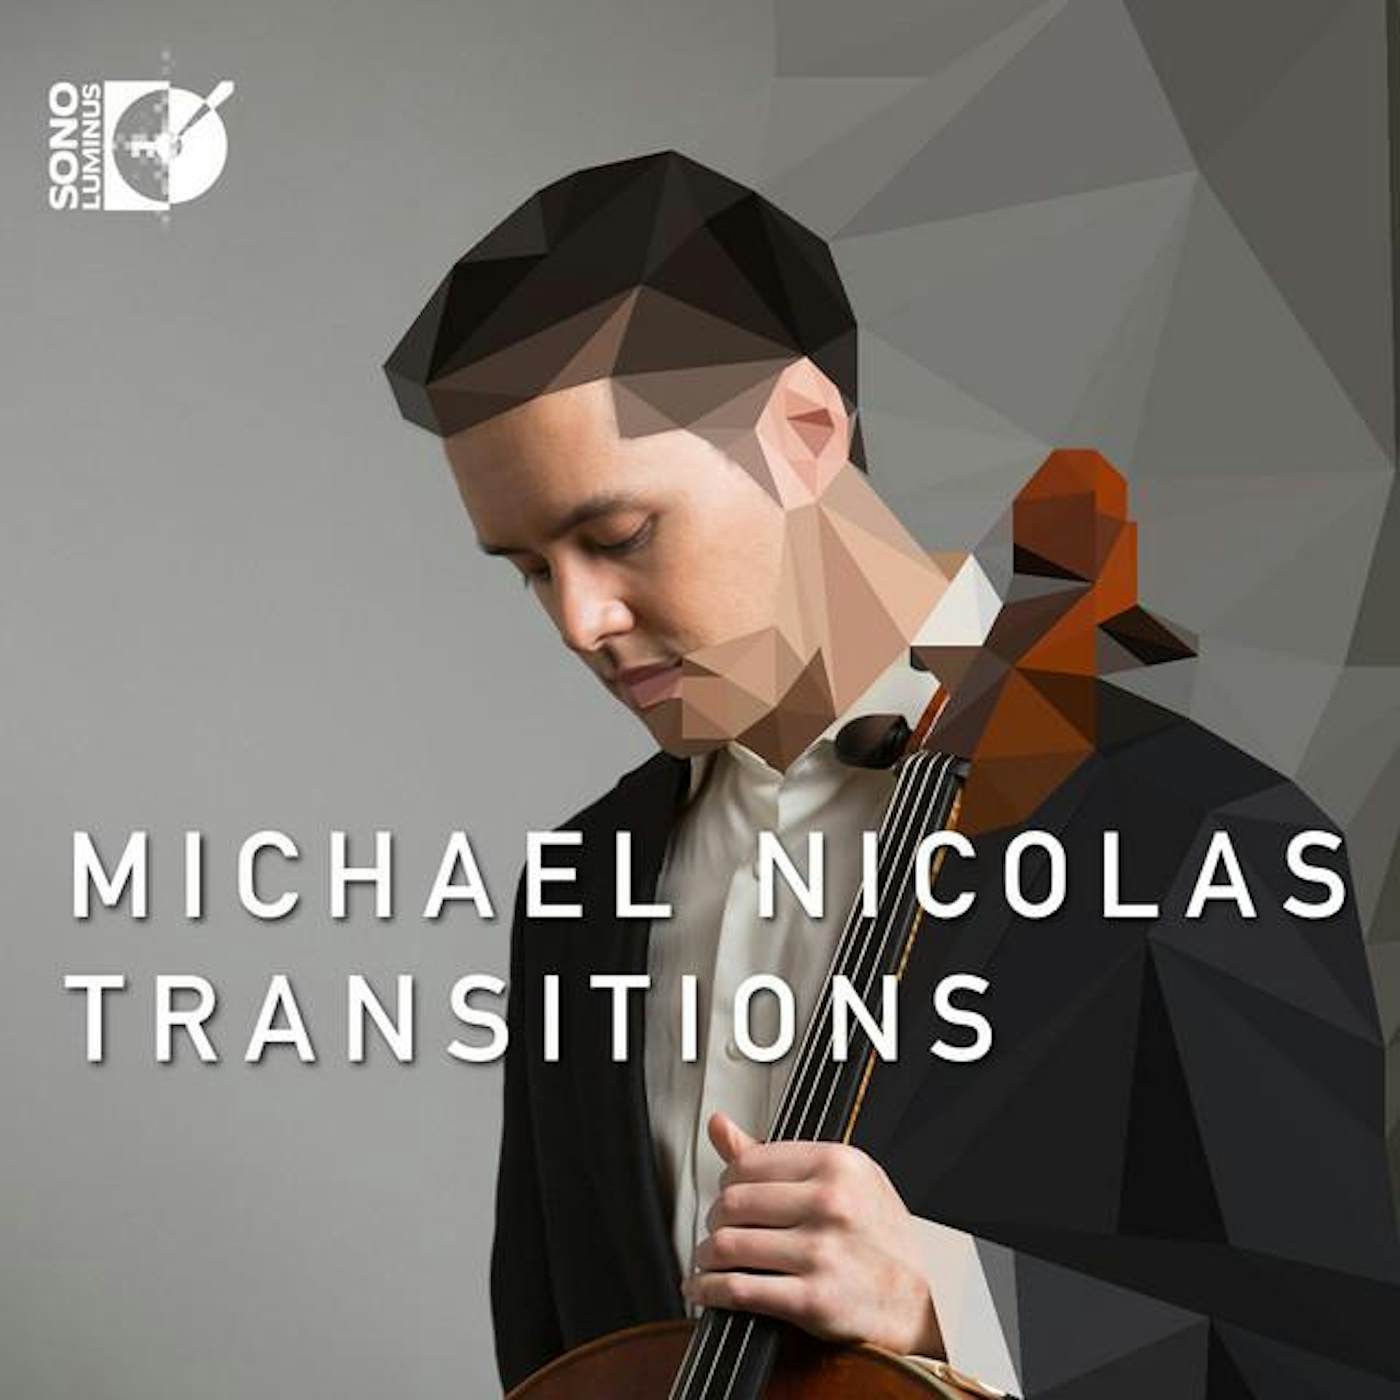 Michael Nicolas